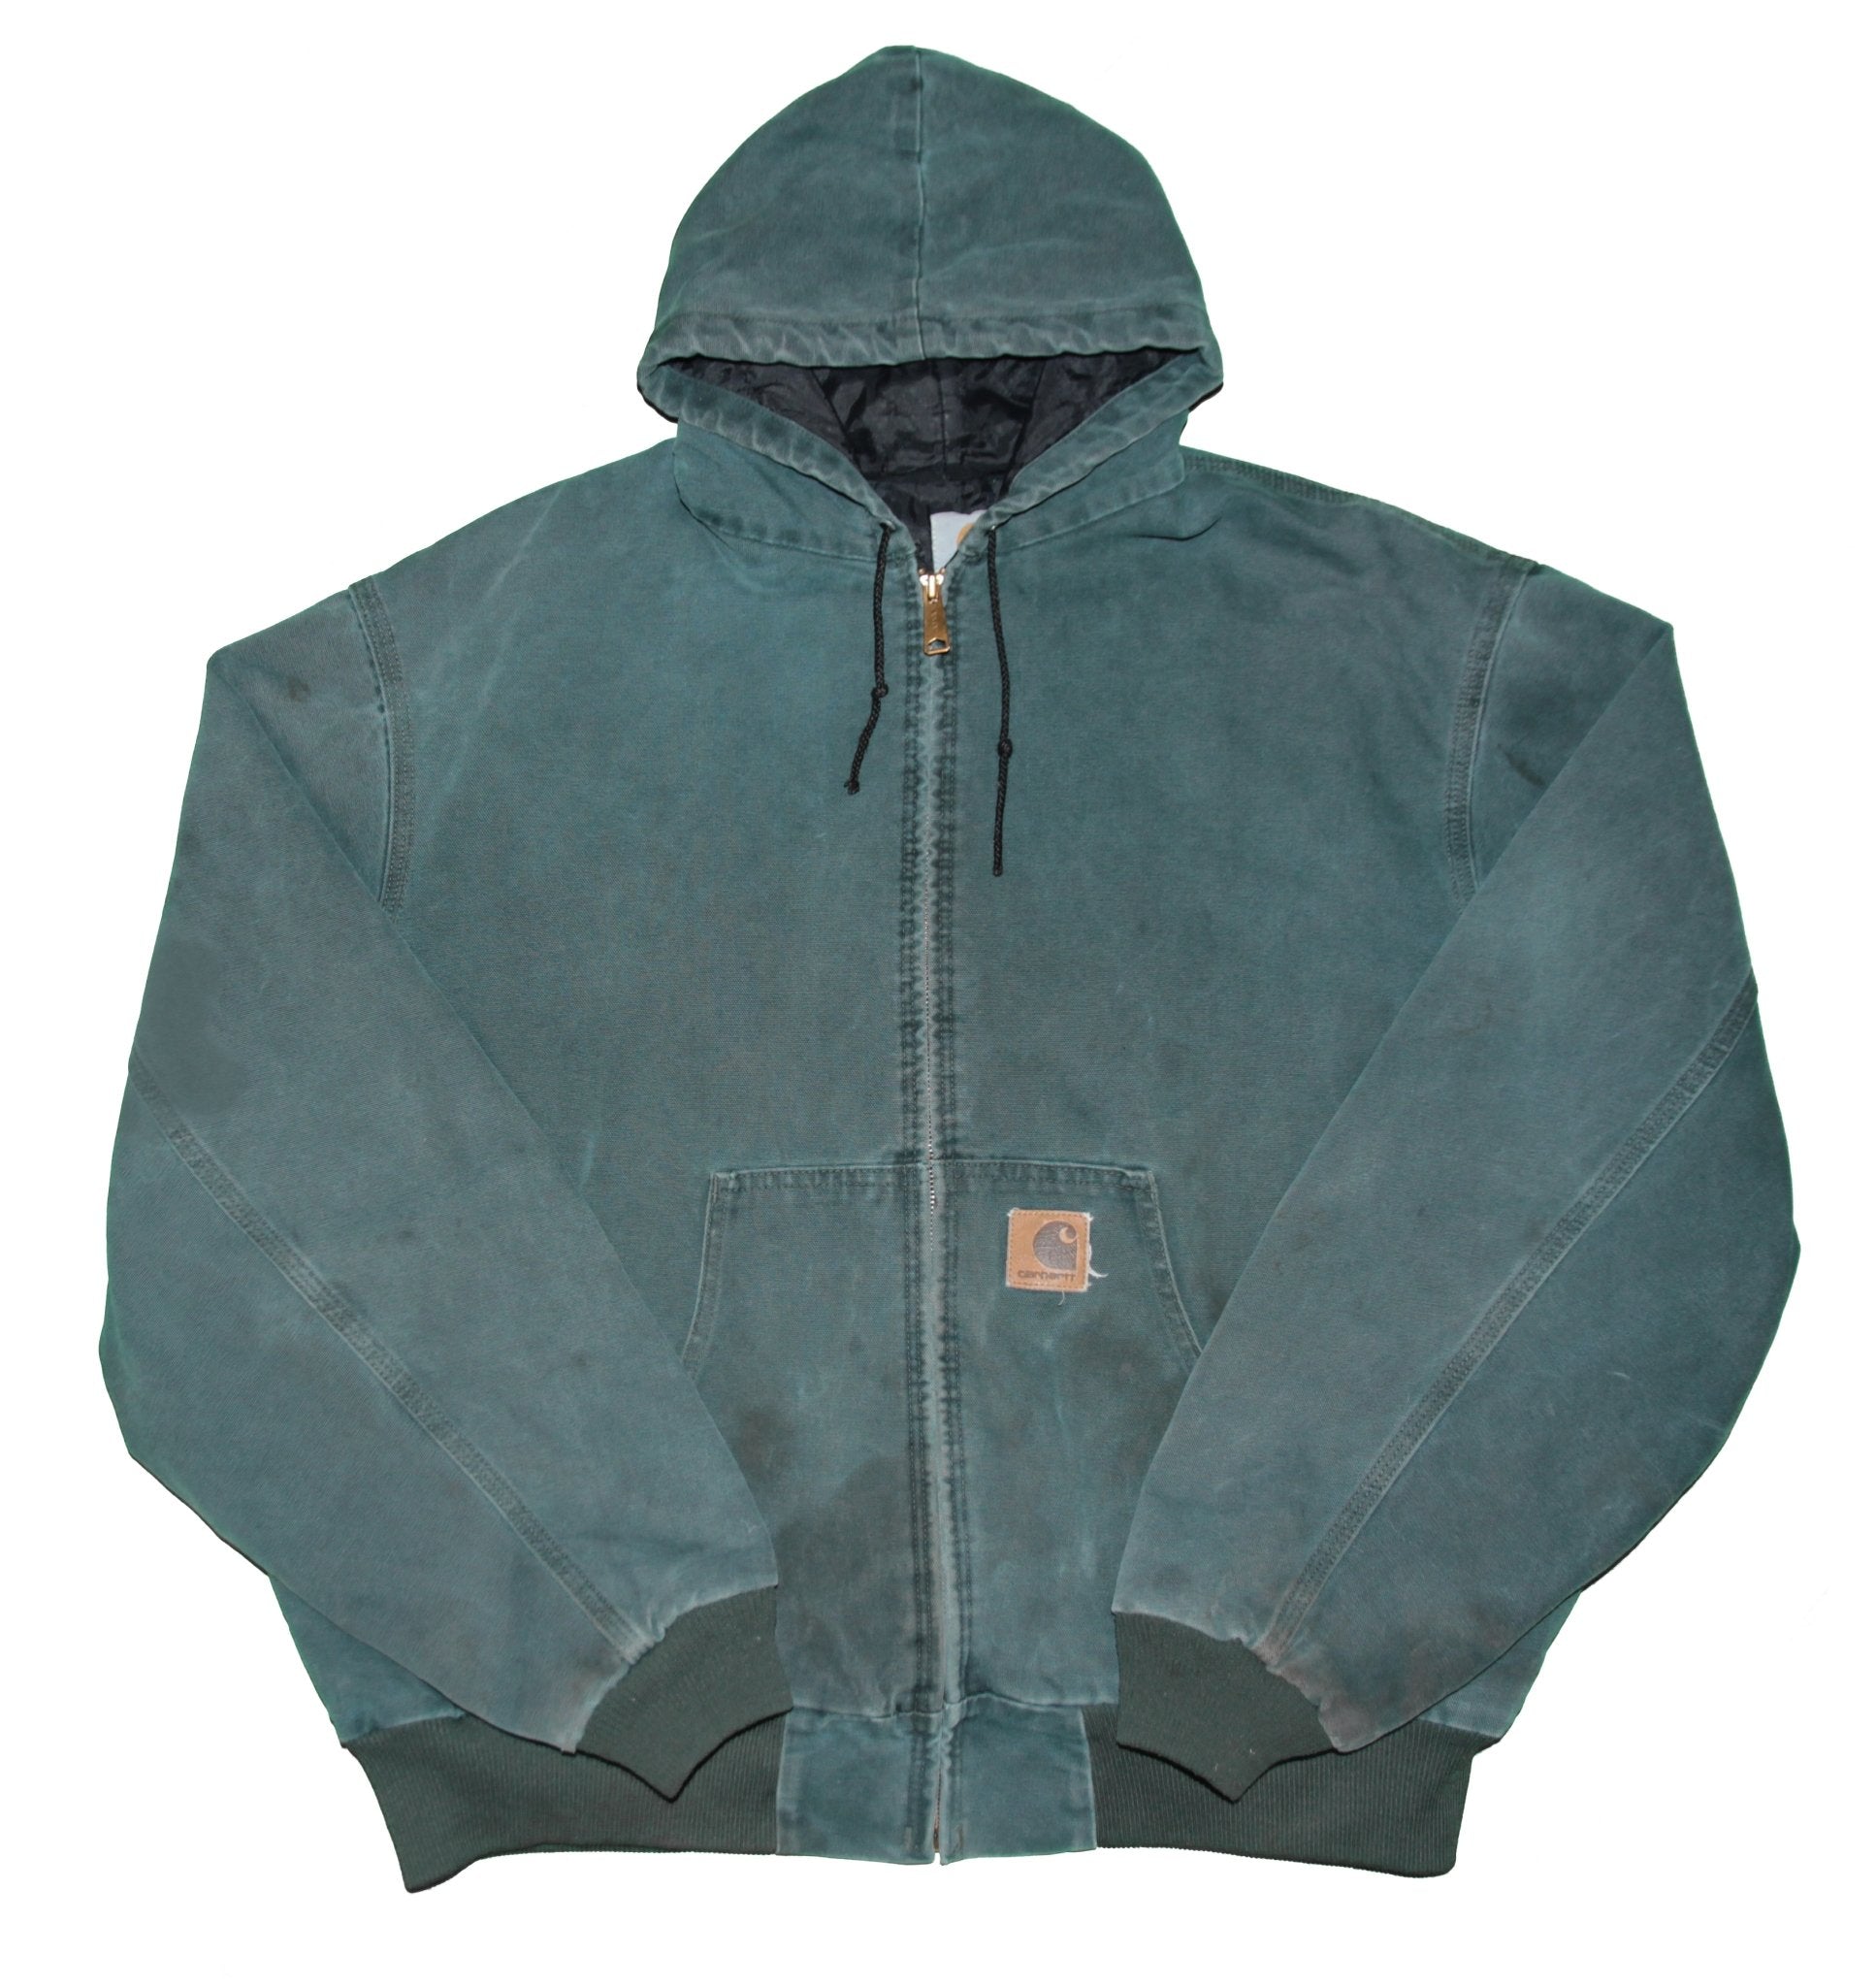 Vintage 90's Carhartt Hooded Worker Jacket Green - Faded AU